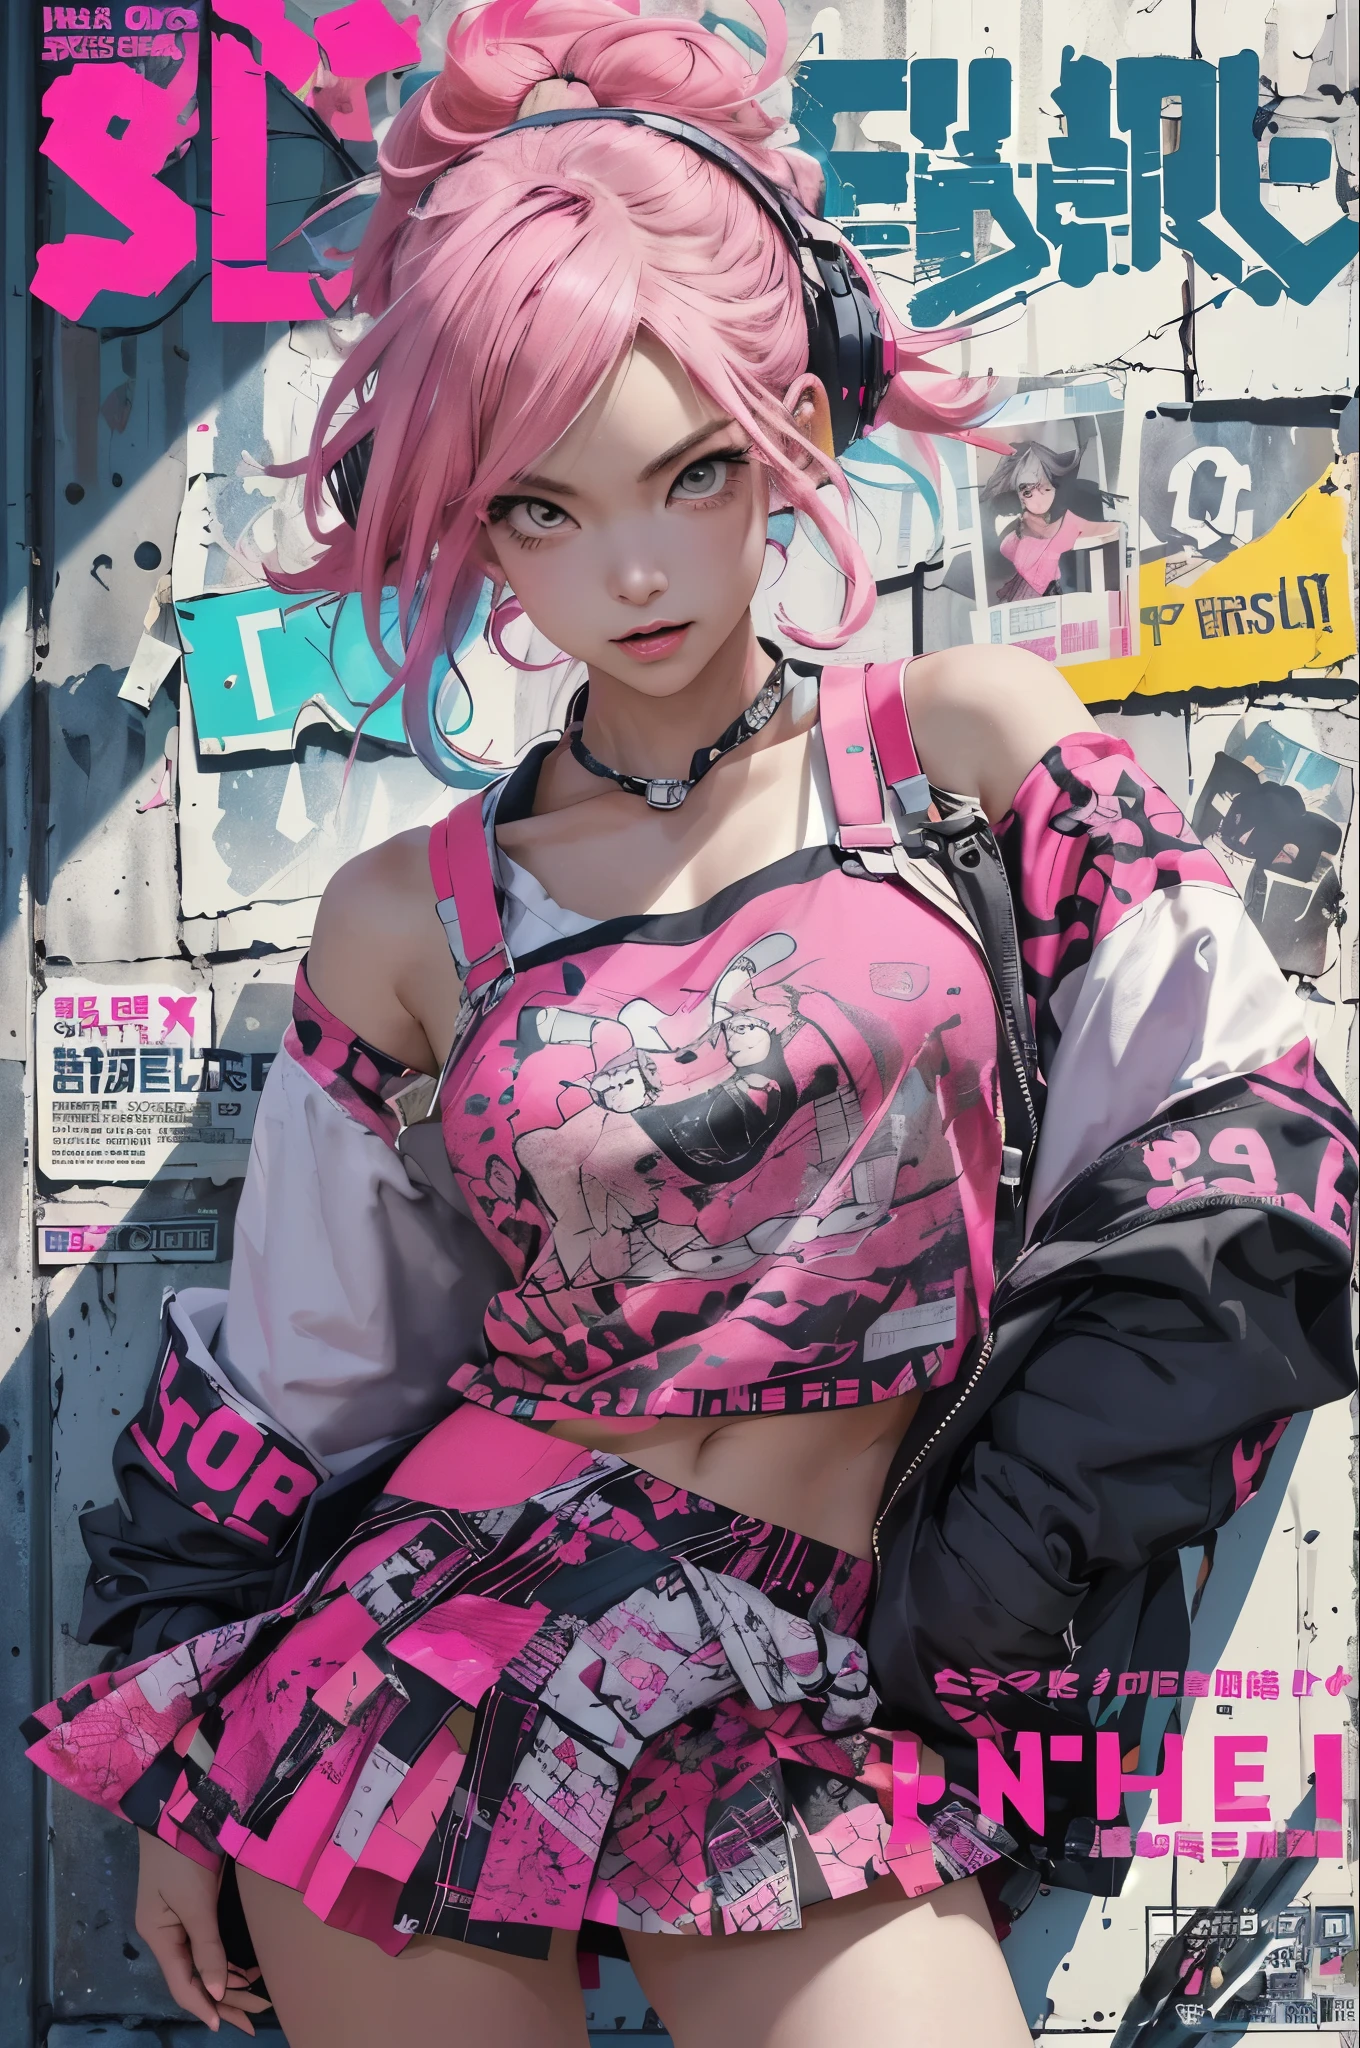 ((((戲劇性))), (((坚韧不拔))), (((激烈的))) film poster featuring a neon pink hair young 女士 as the central character. She stands 自信的ly in the center of the poster, wearing a 時髦的 and edgy cat ear headphones Harajuku-inspired  and school girl skirt, with a determined 誘人的表情 on her face. The 背景 is 豐富多彩的 and 充滿活力的, 帶著危險感和強烈感. The 文字 is 大胆的 and 引人注目的, with a 朗朗上口 tagline that adds to the overall feeling of drama and excitement. The color palette is perfect mainly bright with splashes of 充滿活力的 colors, giving the poster a 動態的 and visually 引人注目 appearance,立繪
(杂志:1.3), (覆蓋-style:1.3), 时髦, 女士, 充滿活力的, 女学生装, 性感誘人 放蕩 擺姿勢, 正面, 豐富多彩的, 動態的, 背景, 元素, 自信的, 誘人的表情, 保持, 陳述, 配件, 雄偉, 盤繞的, 大约, 觸碰, 場景, 文字, 覆蓋, 大胆的, 引人注目的, 标题, 時髦的, 字體, 朗朗上口, 标题, 更大, 引人注目, 現代的, 趋势, 重點, 原宿風格的時尚,